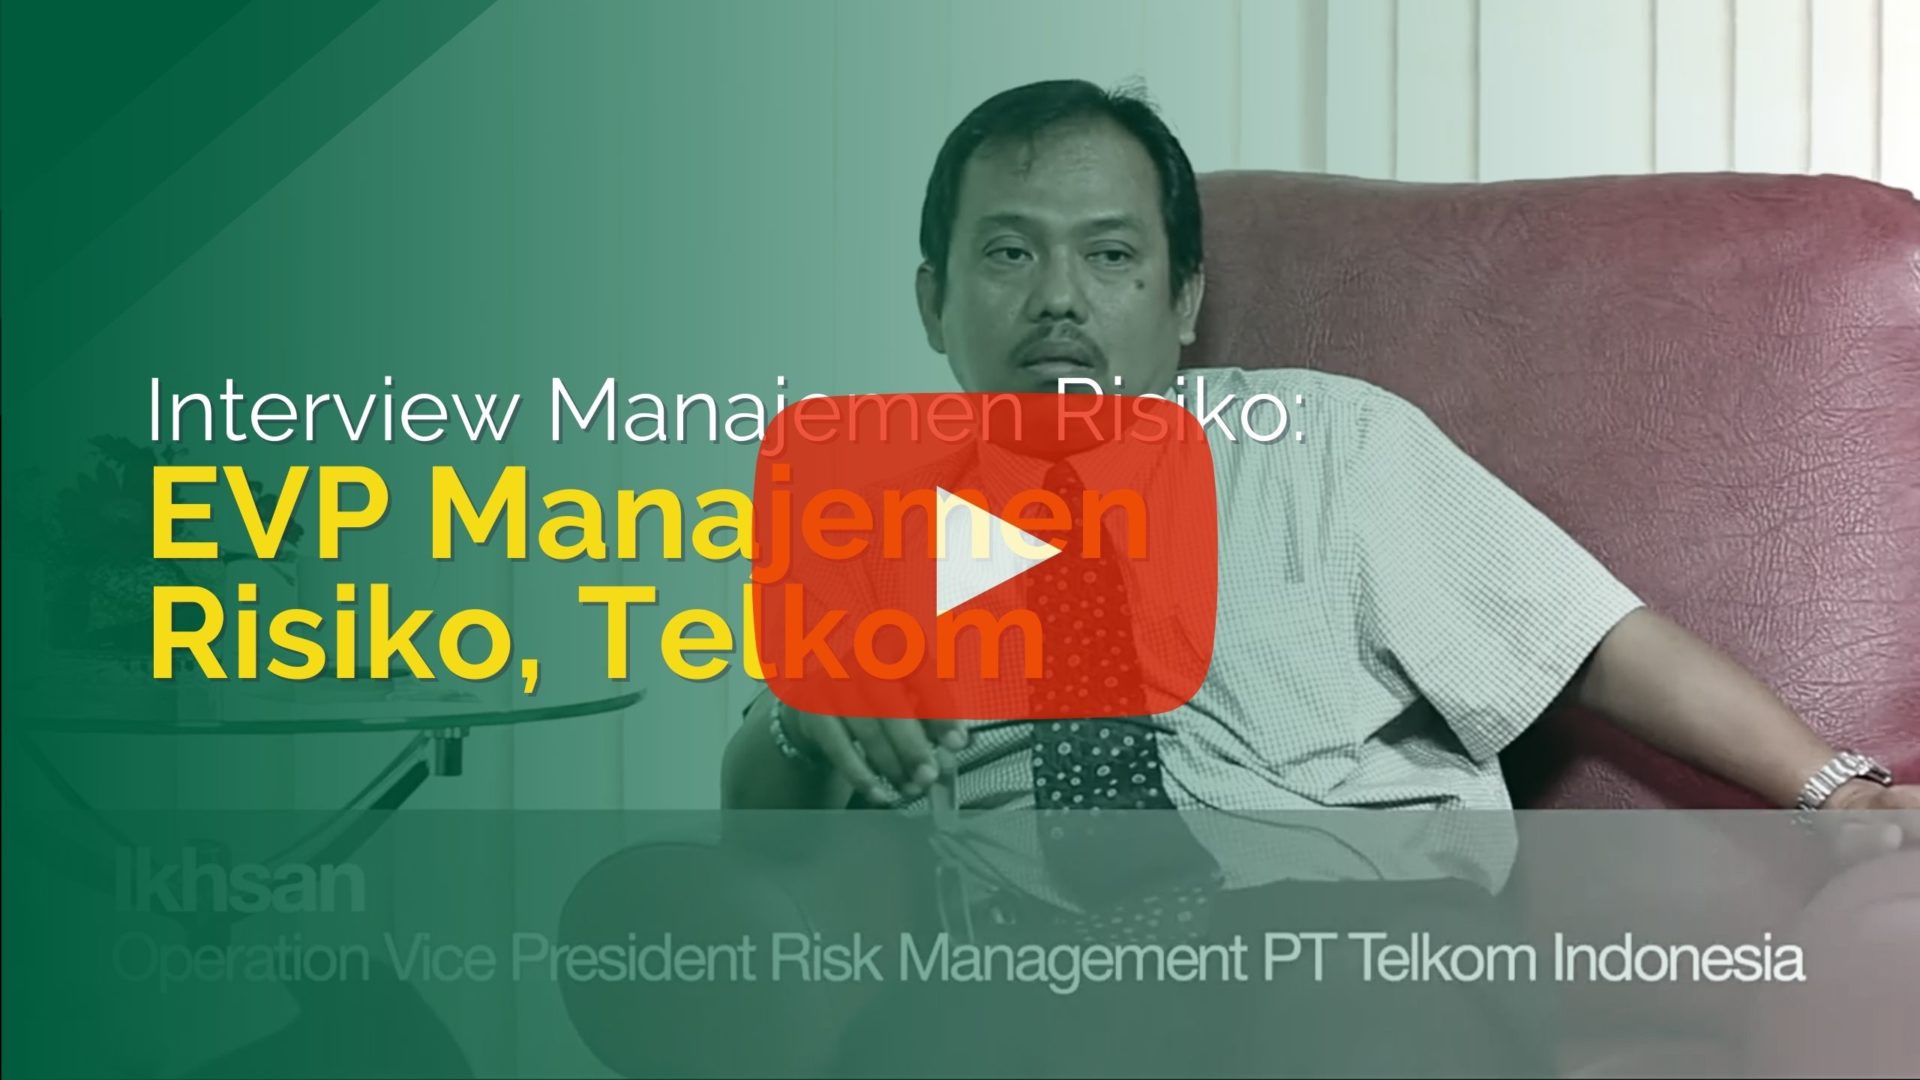 Interview Manajemen Risiko – EVP Manajemen Risiko, Telkom